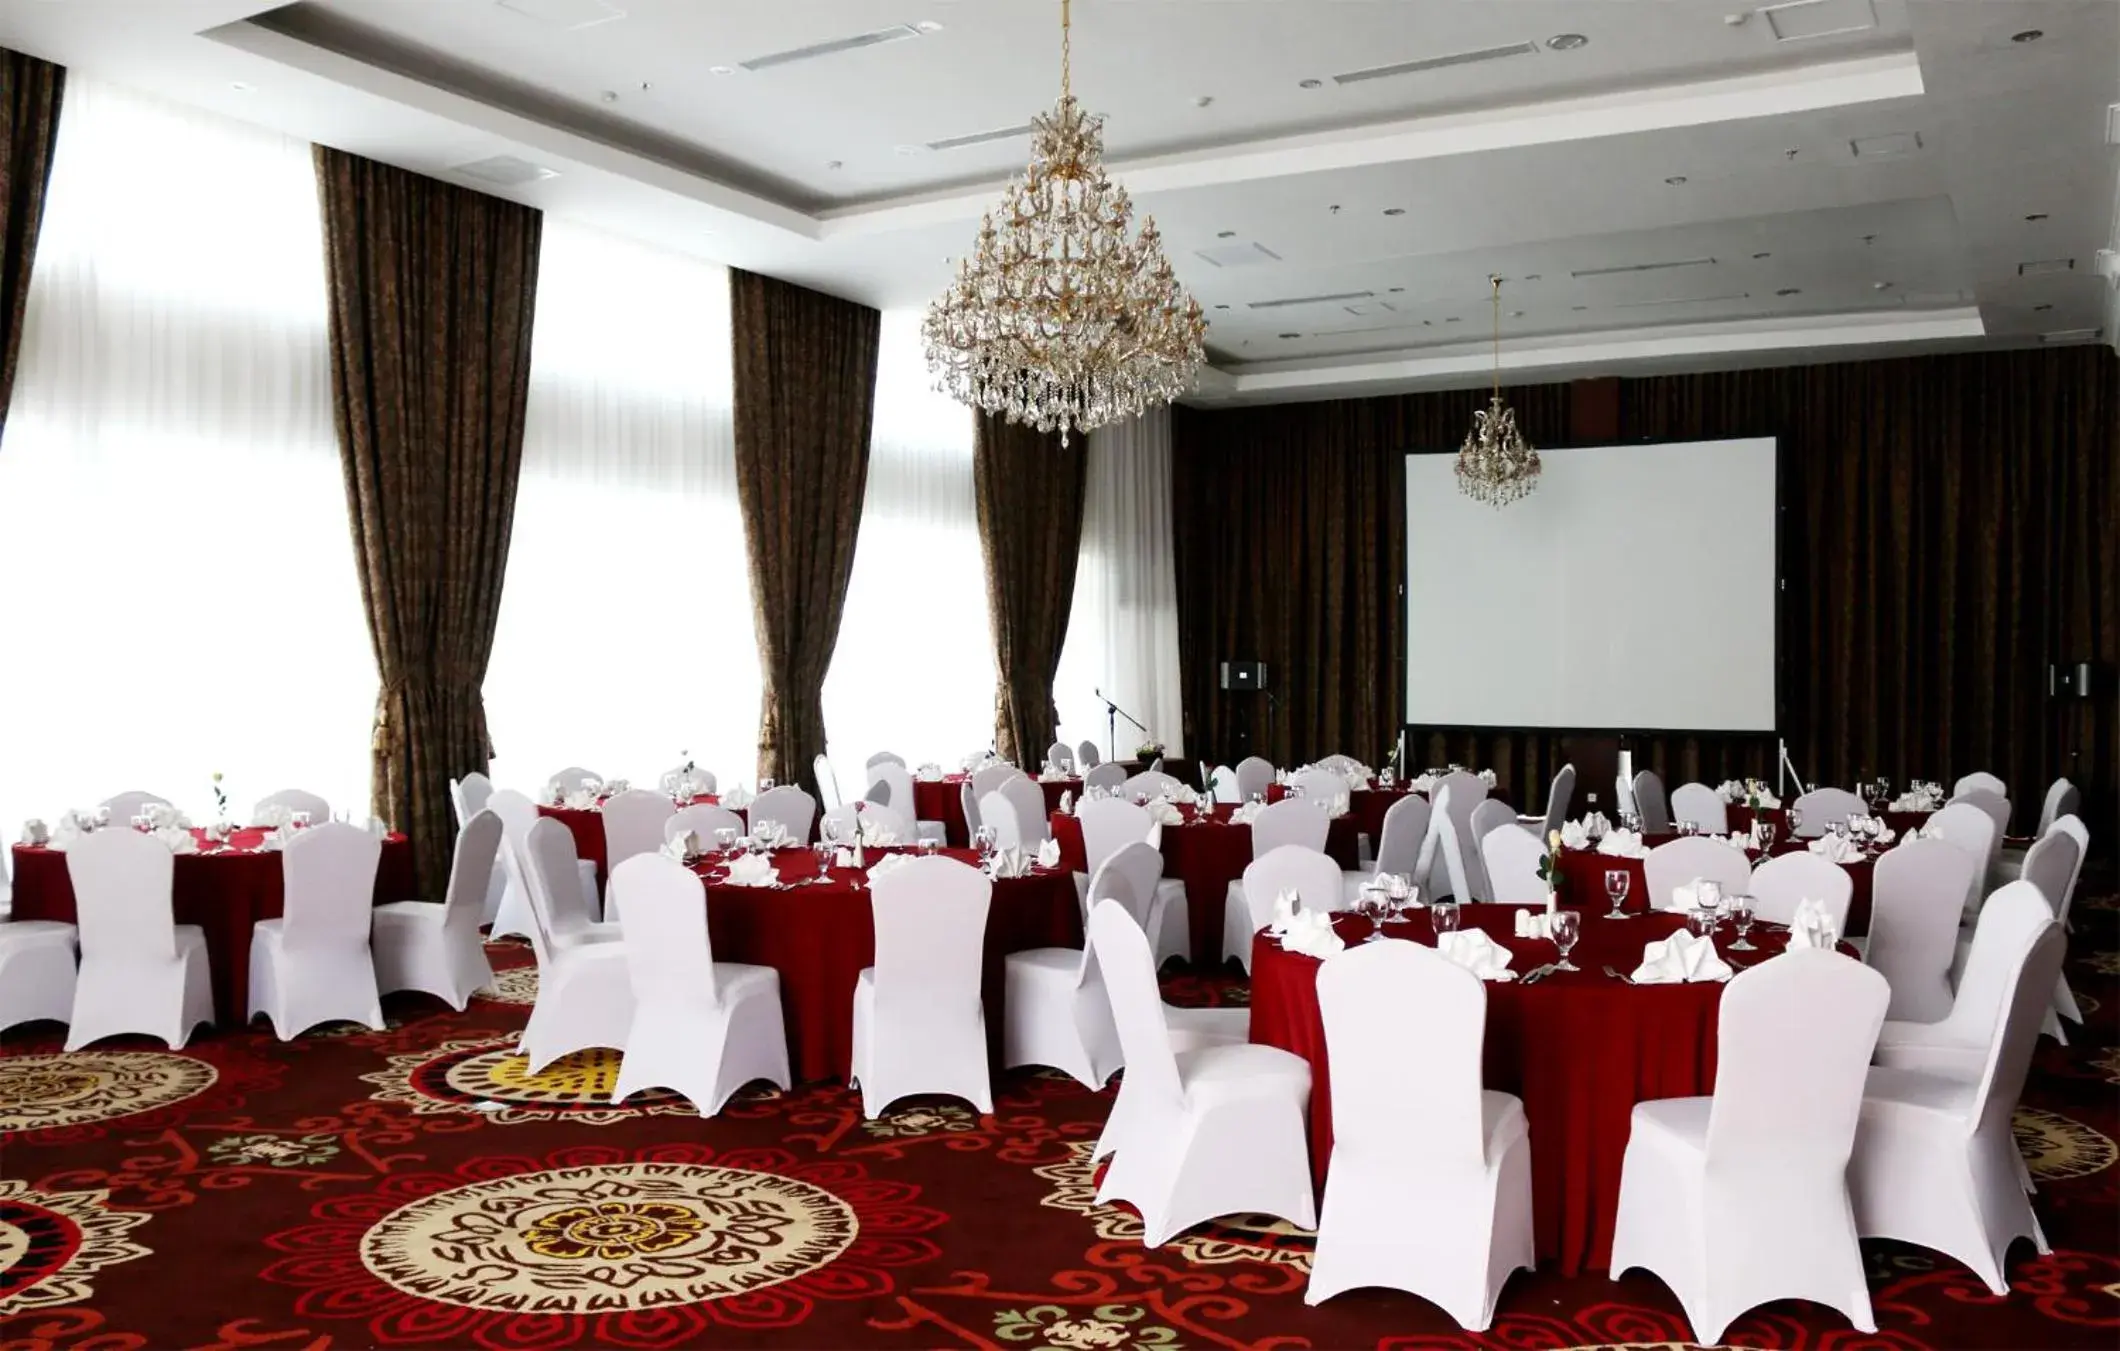 Banquet/Function facilities, Banquet Facilities in Java Palace Hotel